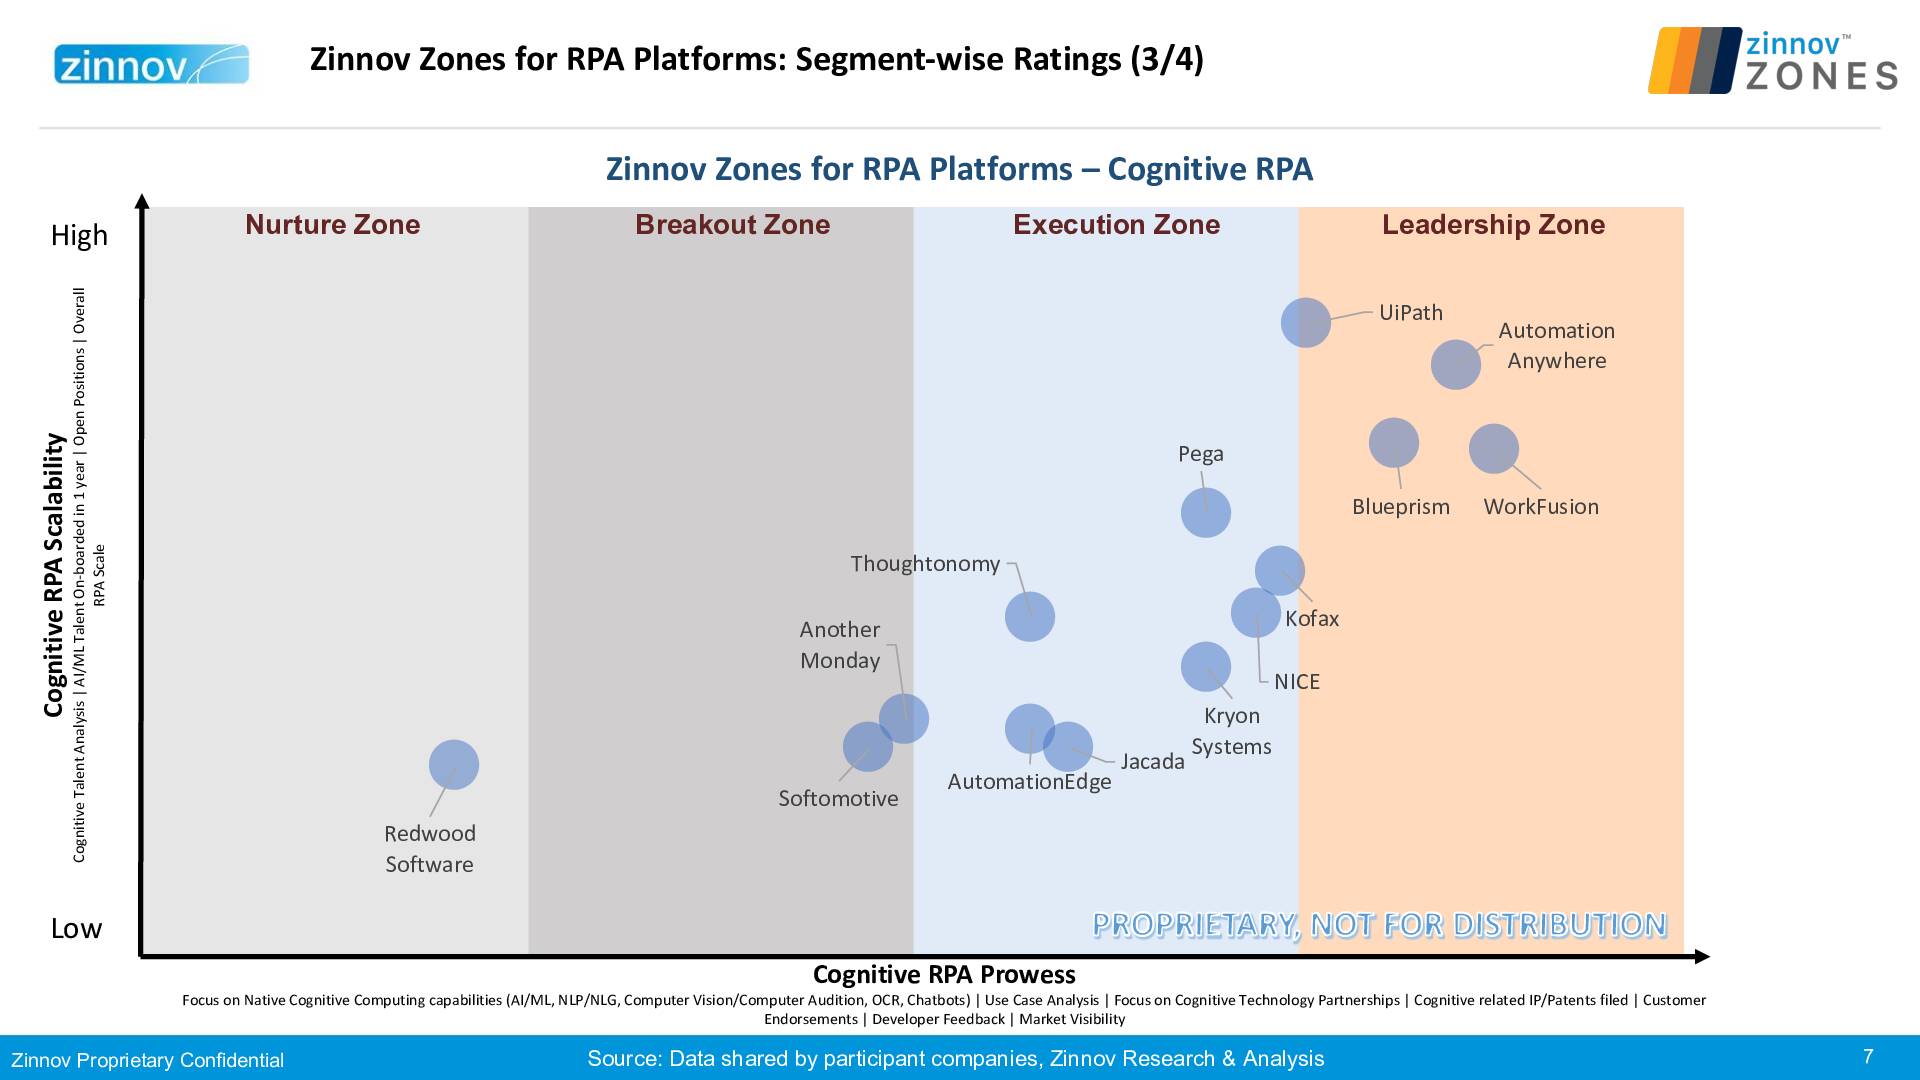 Zinnov Zones Rpa Platforms 2019 Ratings Revised V57